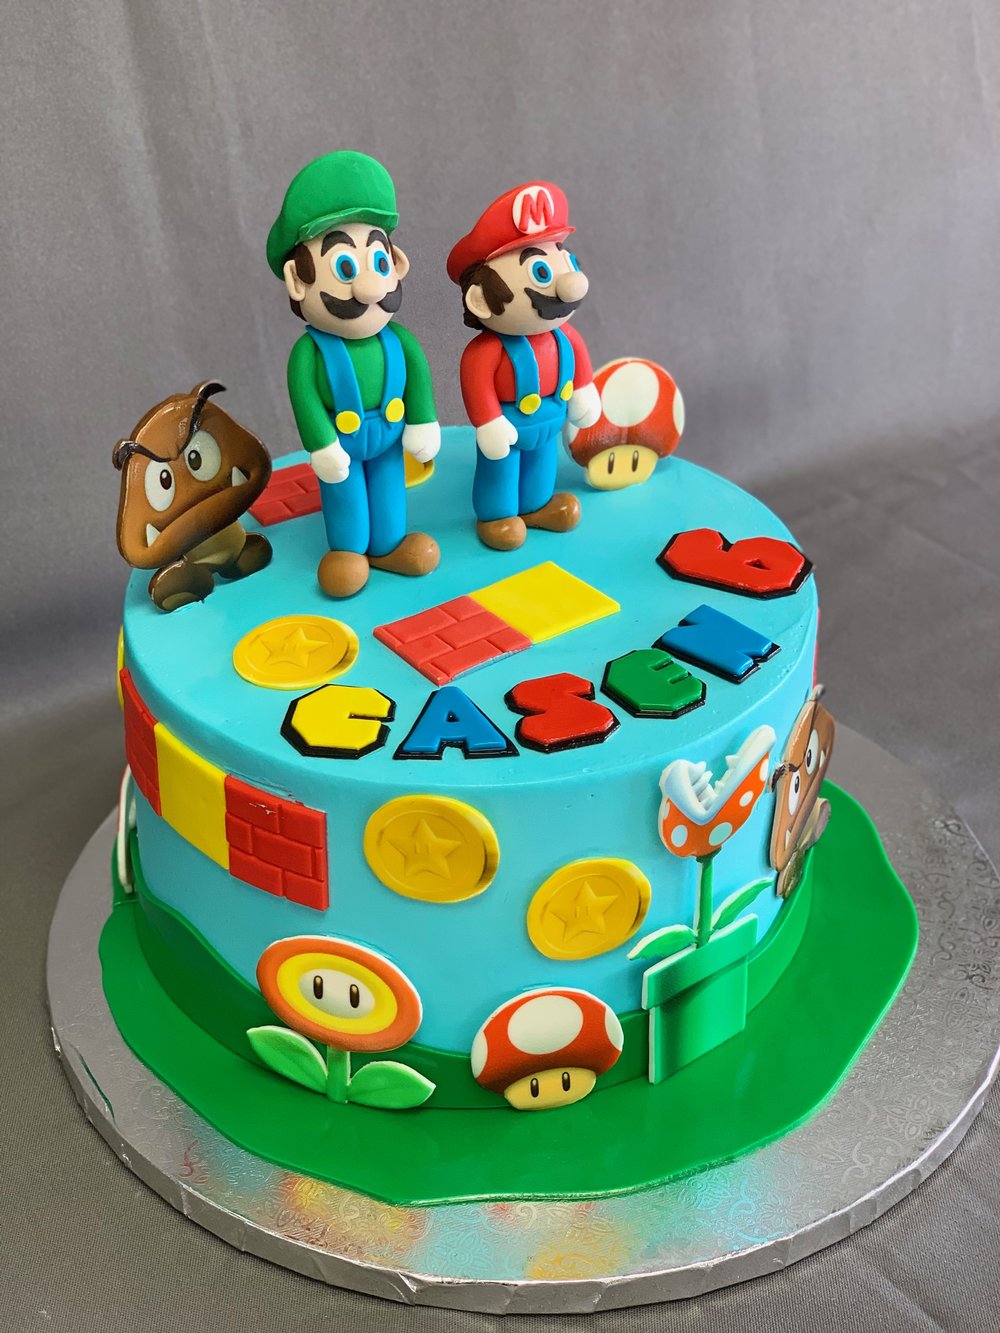 Super Mario Birthday Cake Skazka Desserts Bakery Nj Custom Birthday Cakes Cupcakes Shop